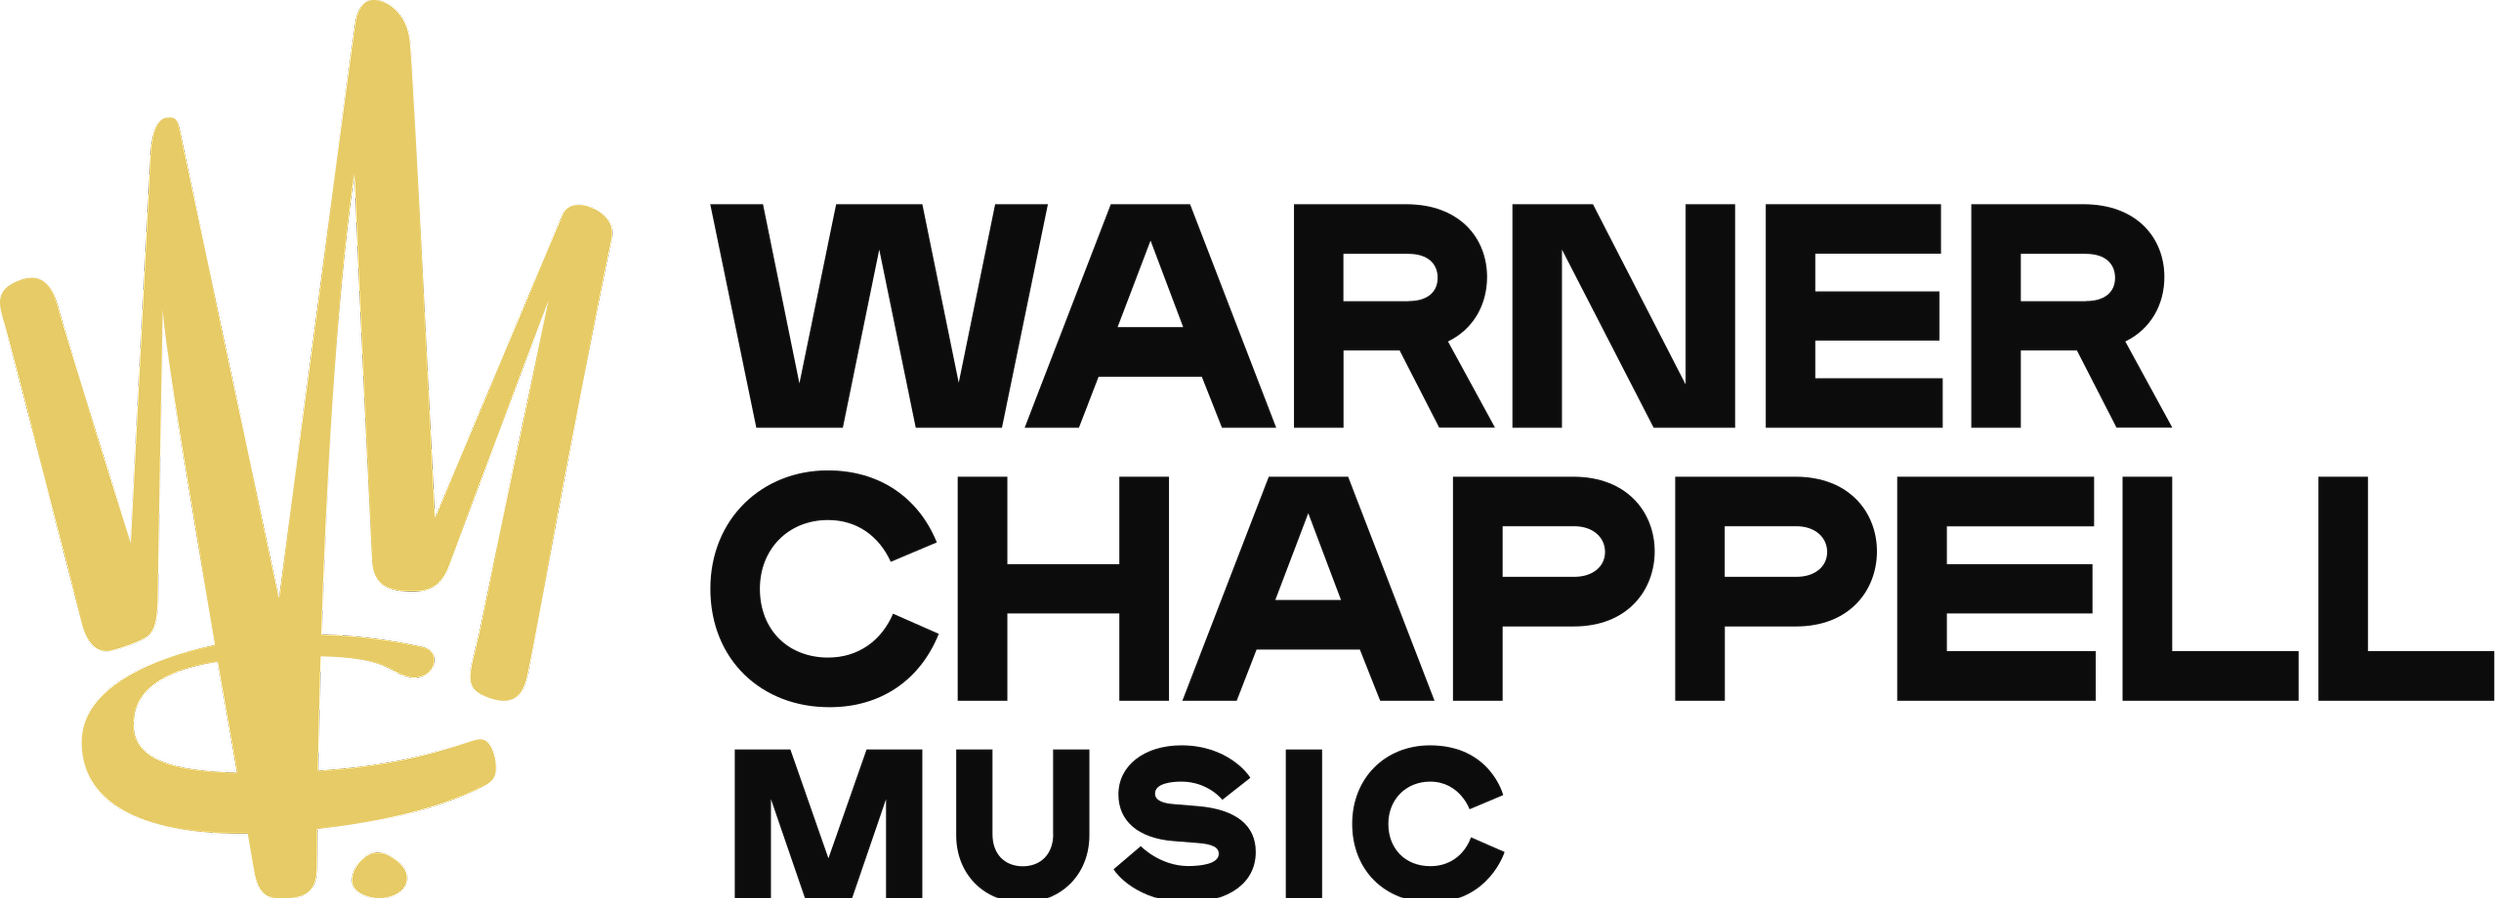 Warner_Chappell_Music_logo.svg.png